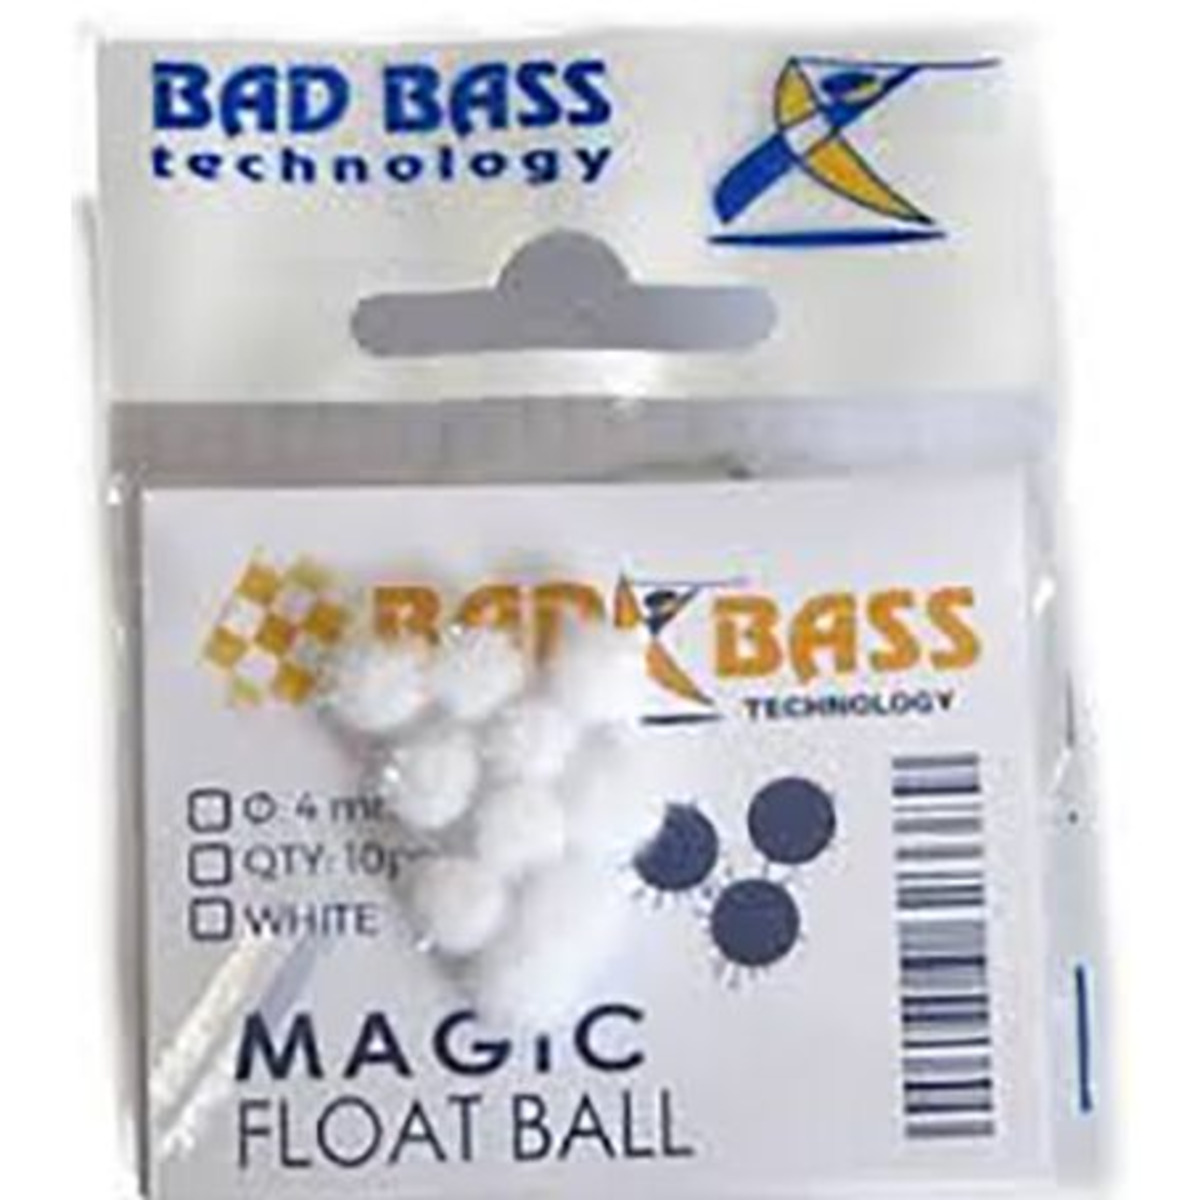 Bad Bass Magic Float Ball - 6 mm - White